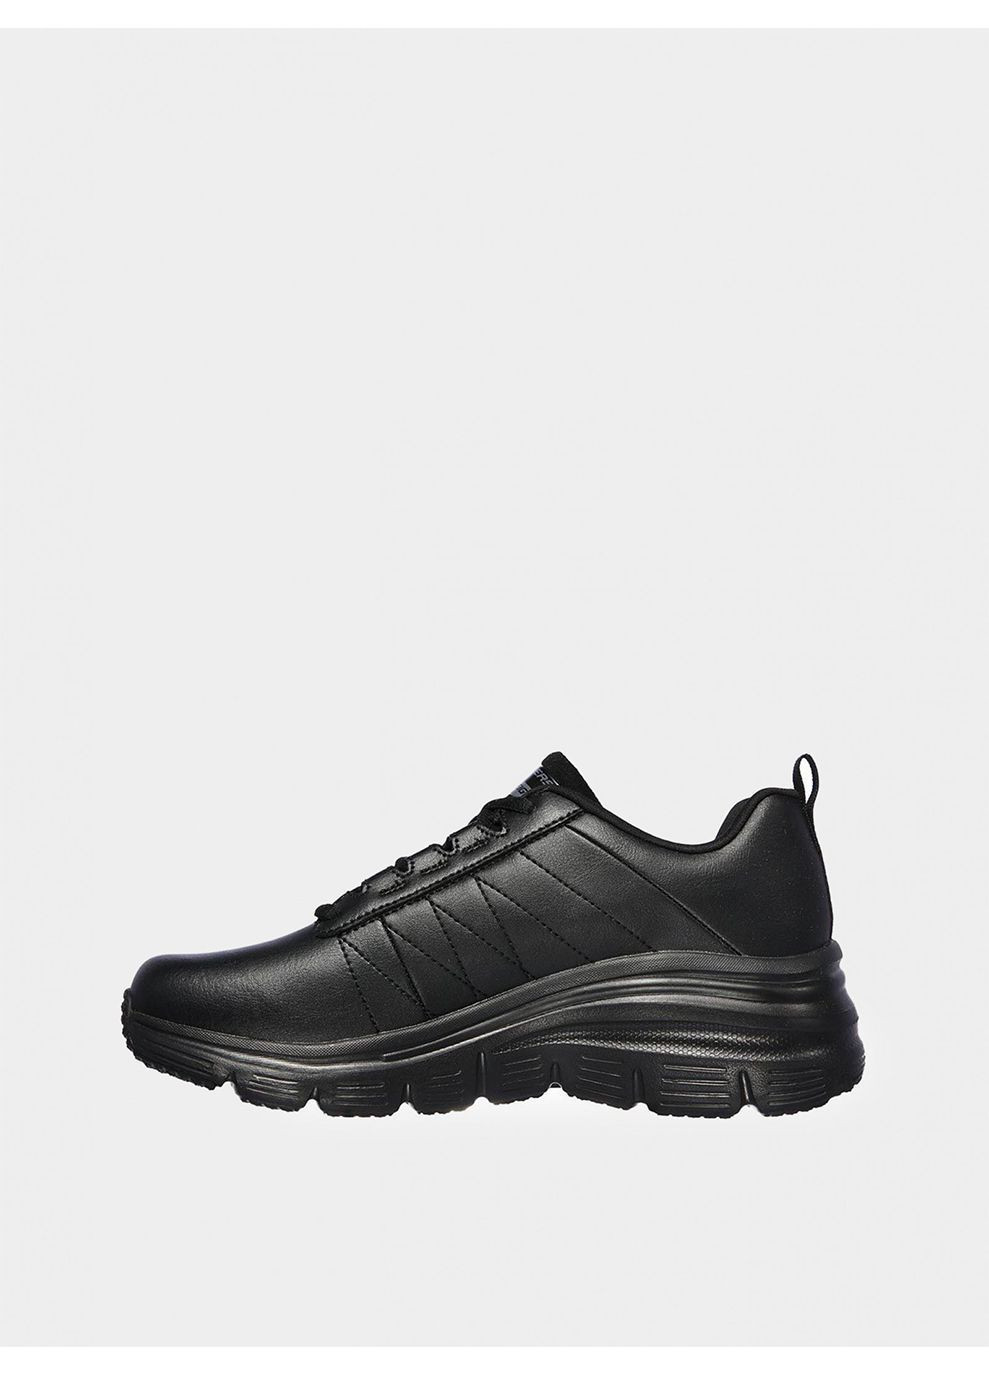 Черные осенние ботинки relaxed fit: respected - boswell черный Skechers